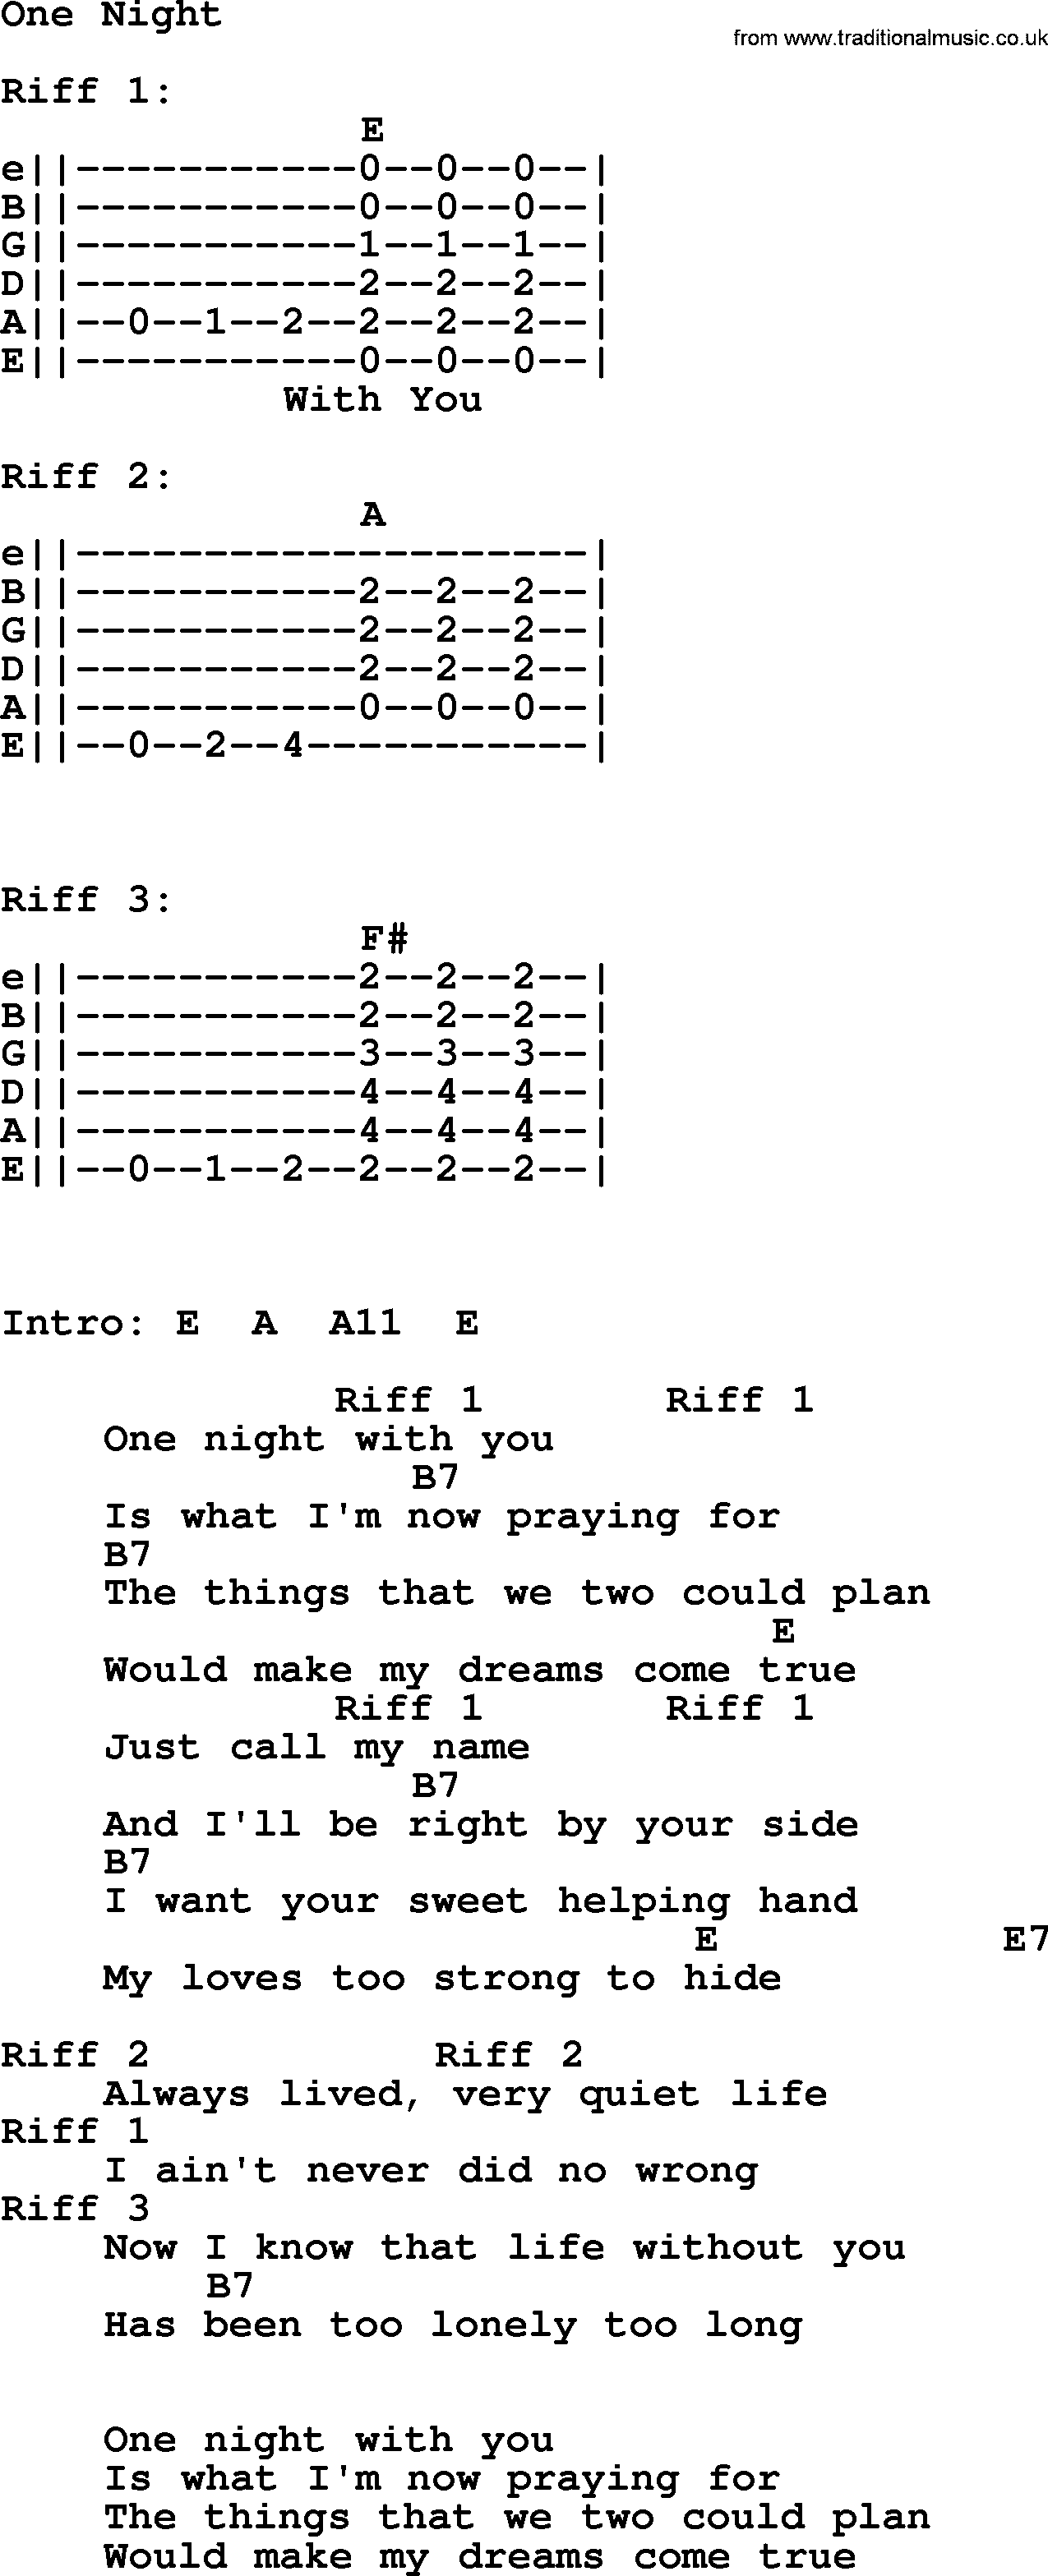 One Night, by Elvis Presley - lyrics and chords